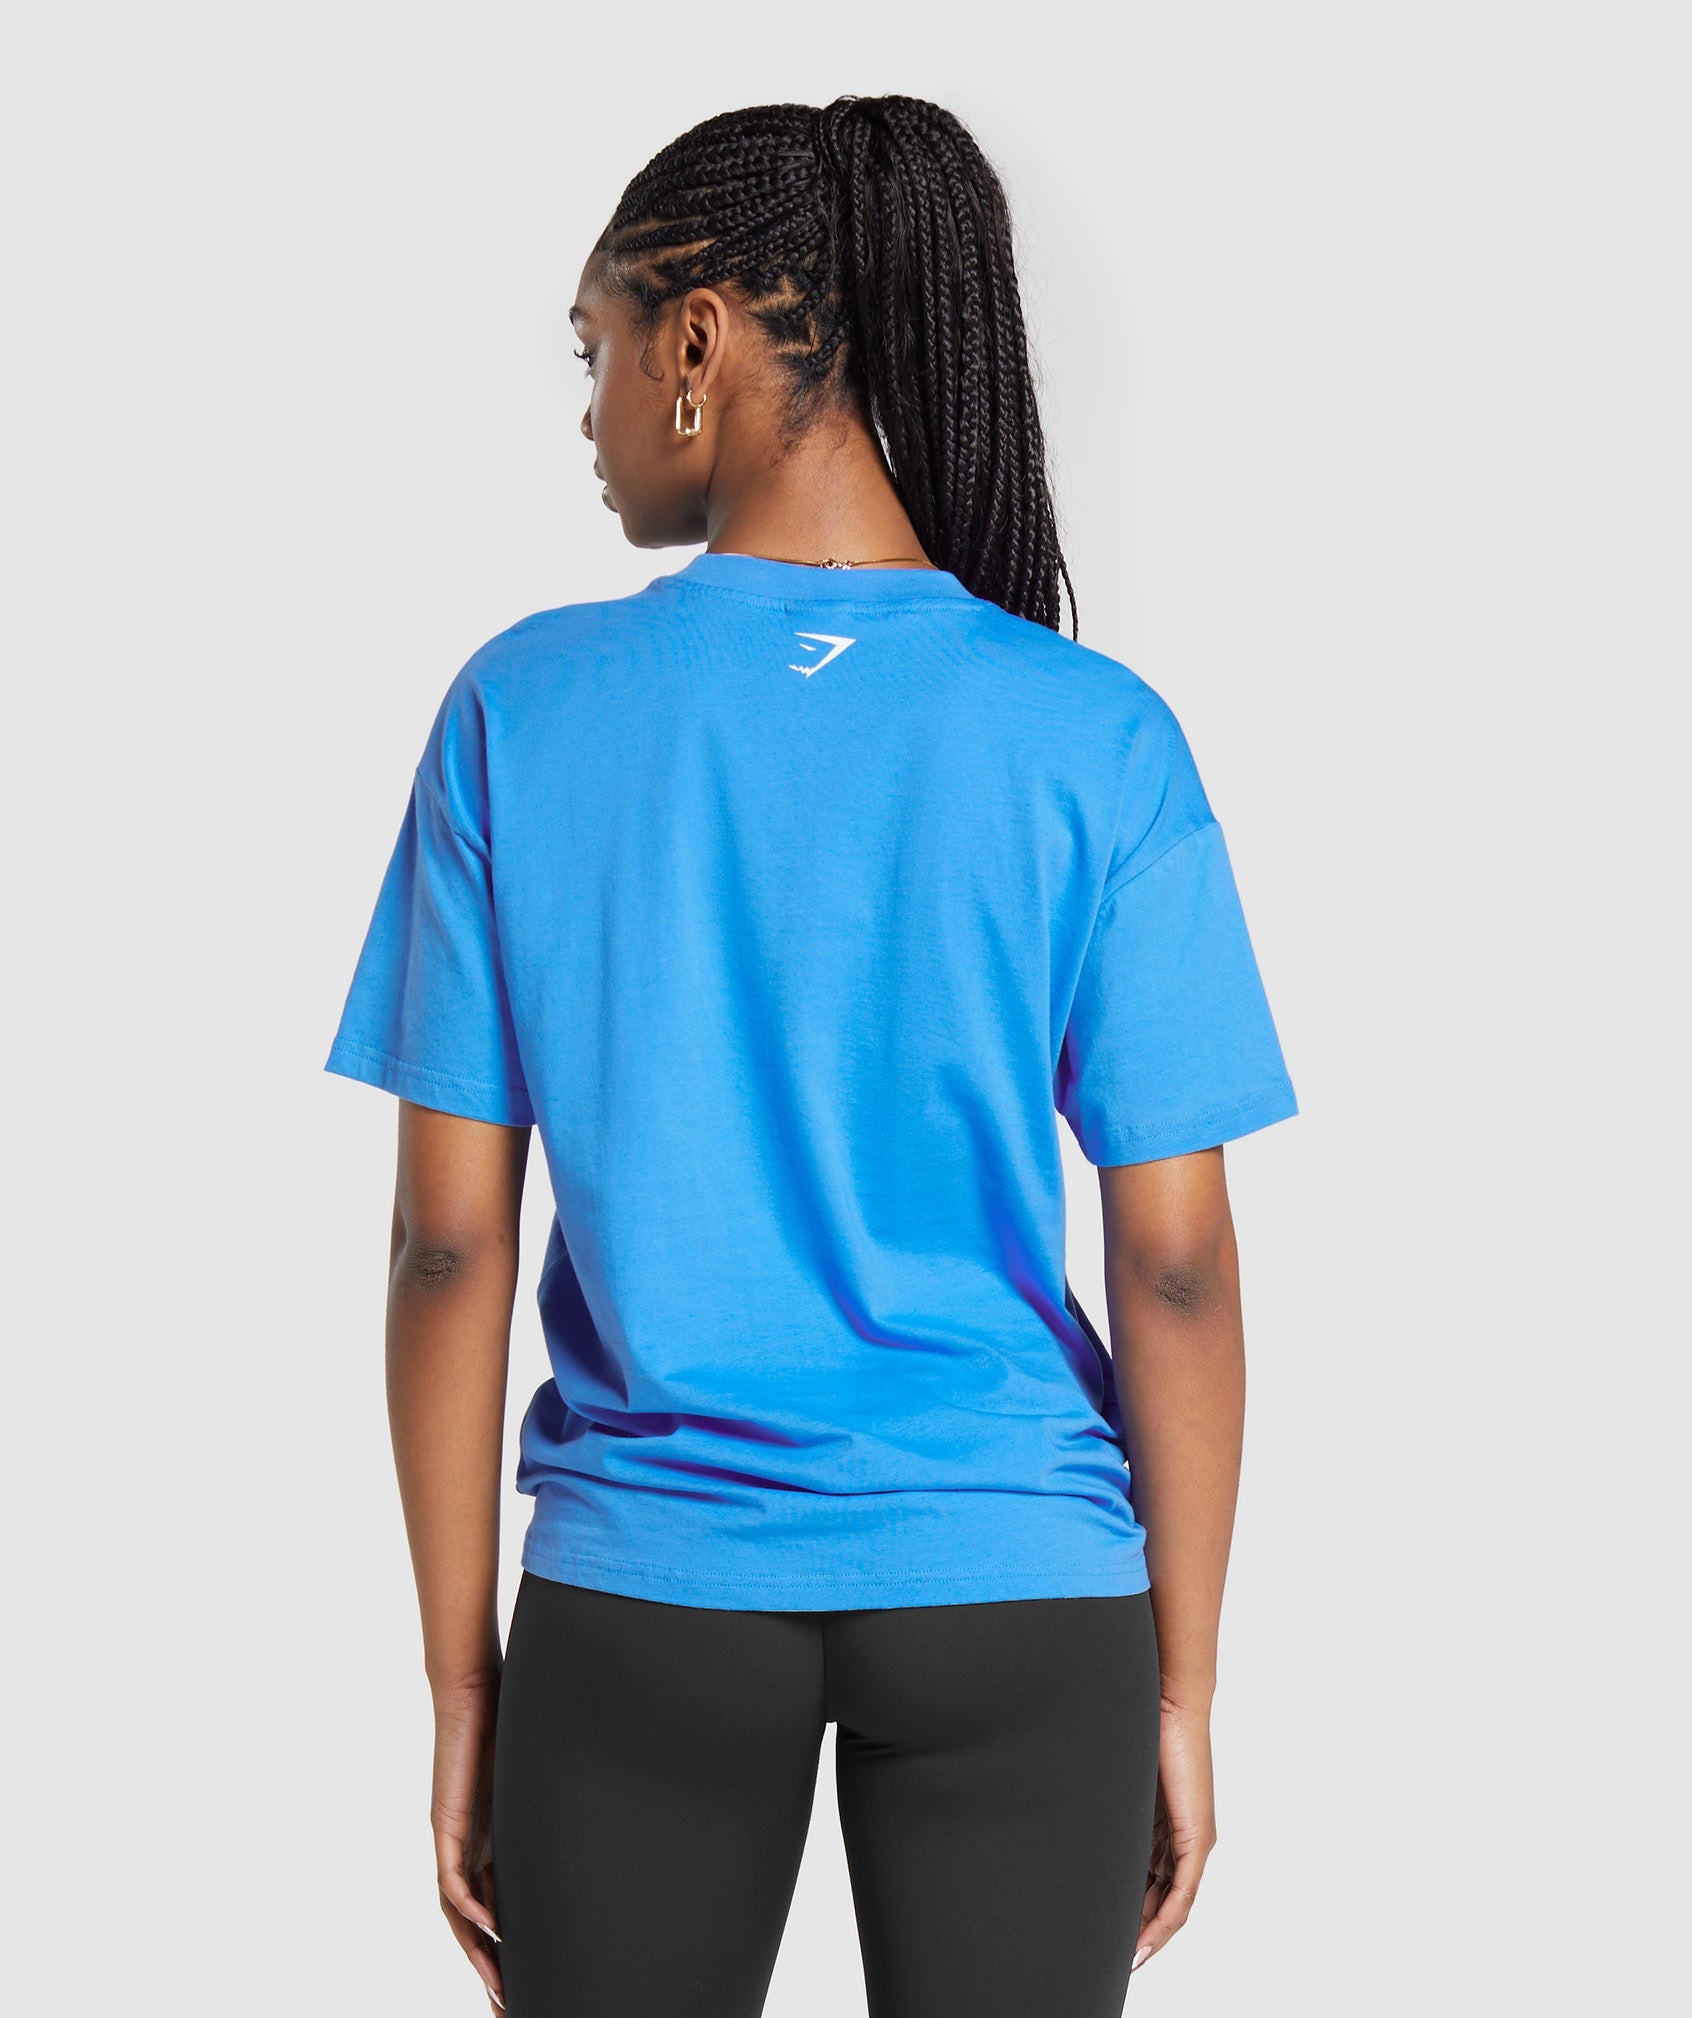 Love Fitness Aqua Fitness Coach Uniform 3D T-Shirt [Non Workwear]